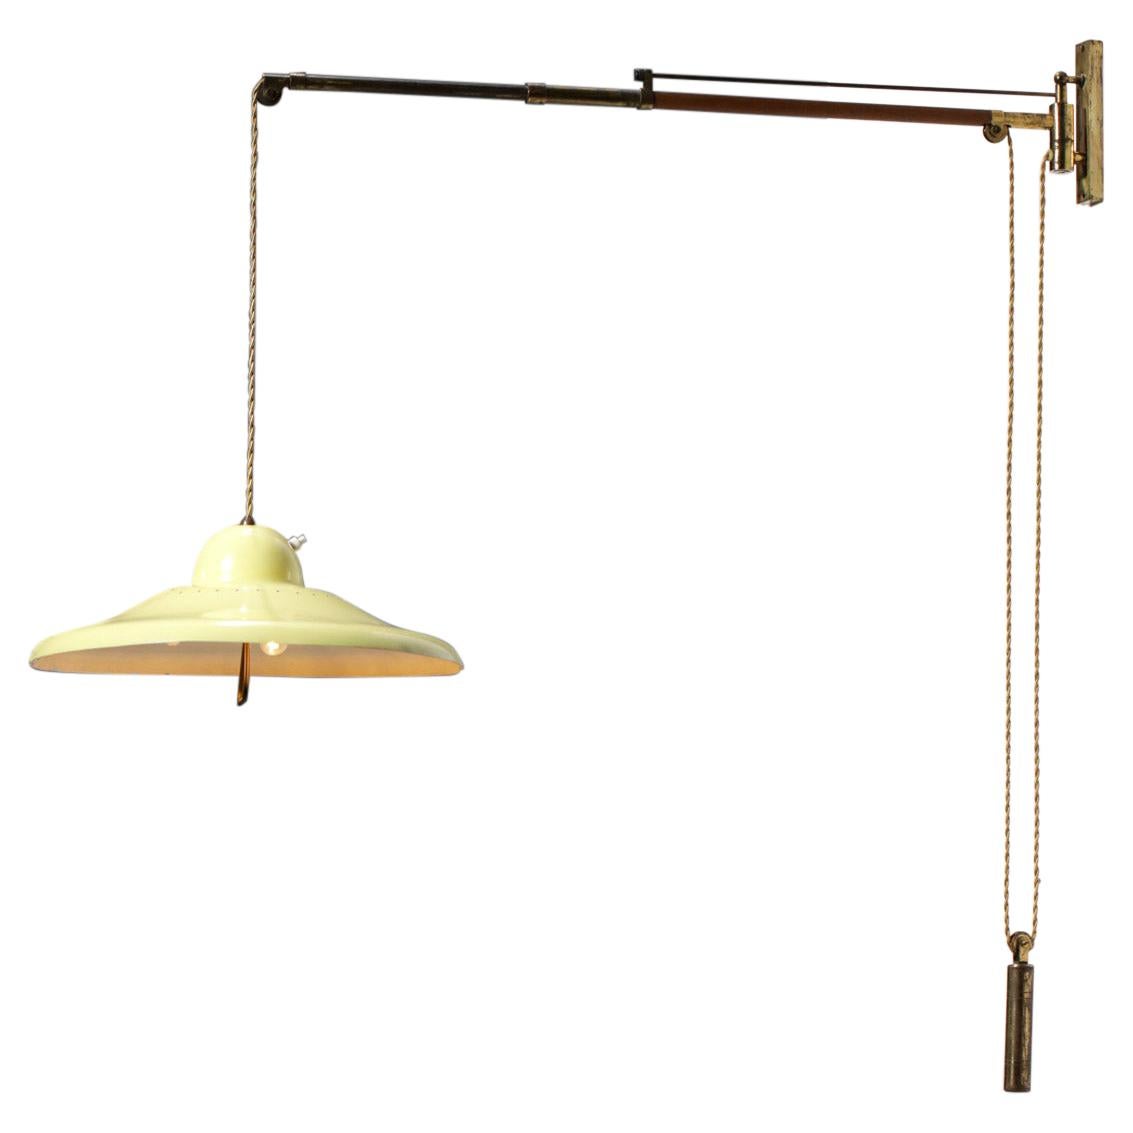 Italian Period Lamp Arredoluce Style Yellow Pulley - F078